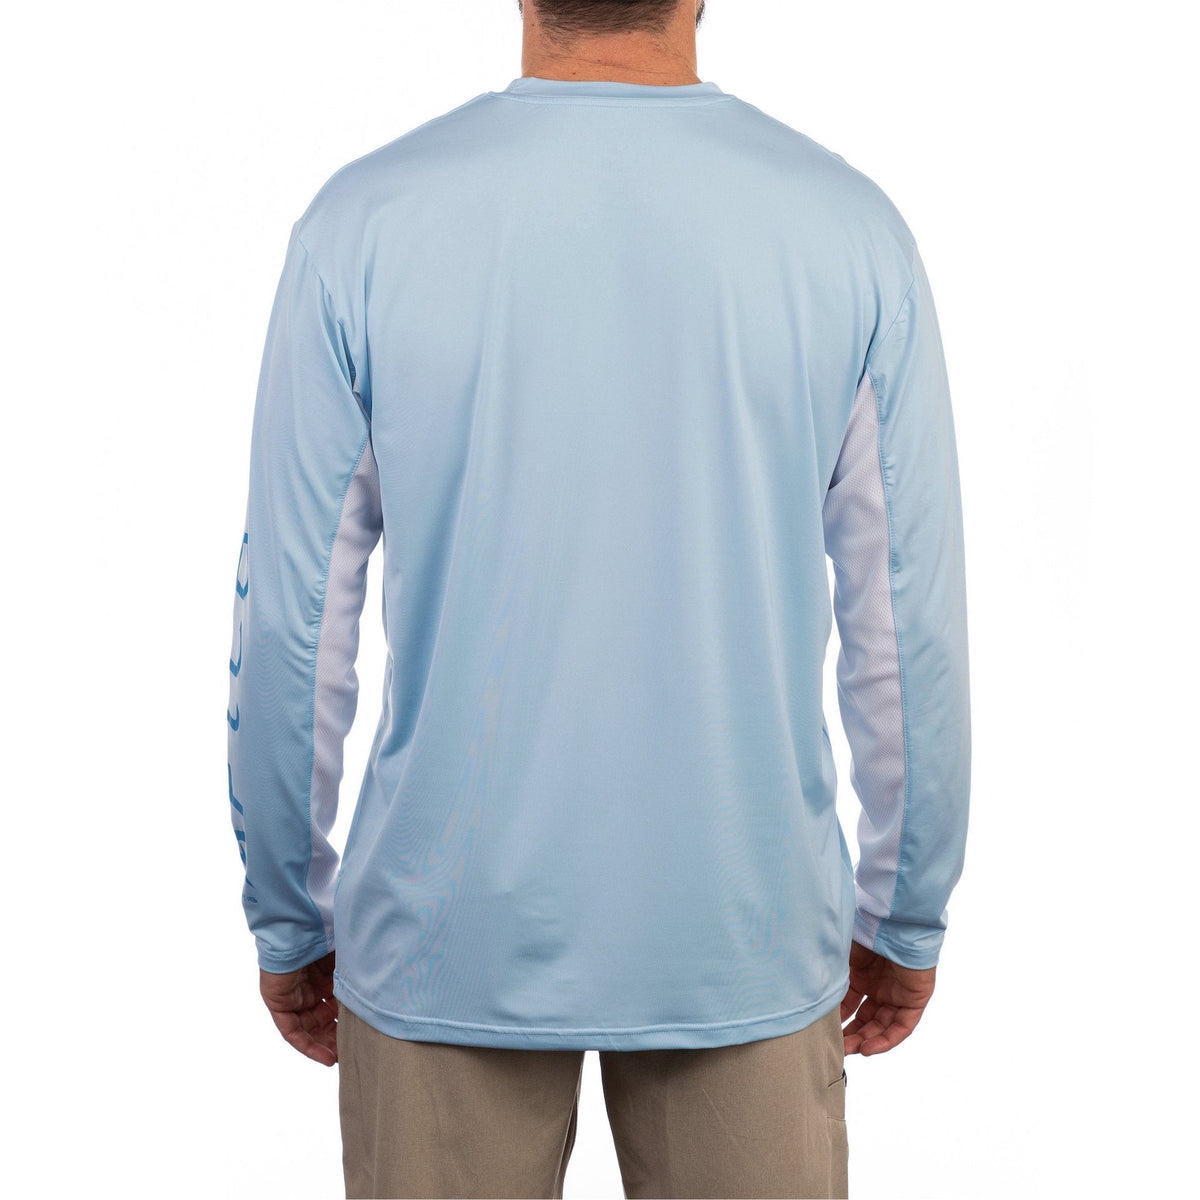 AFTCO Prisma Long Sleeve Performance Shirt